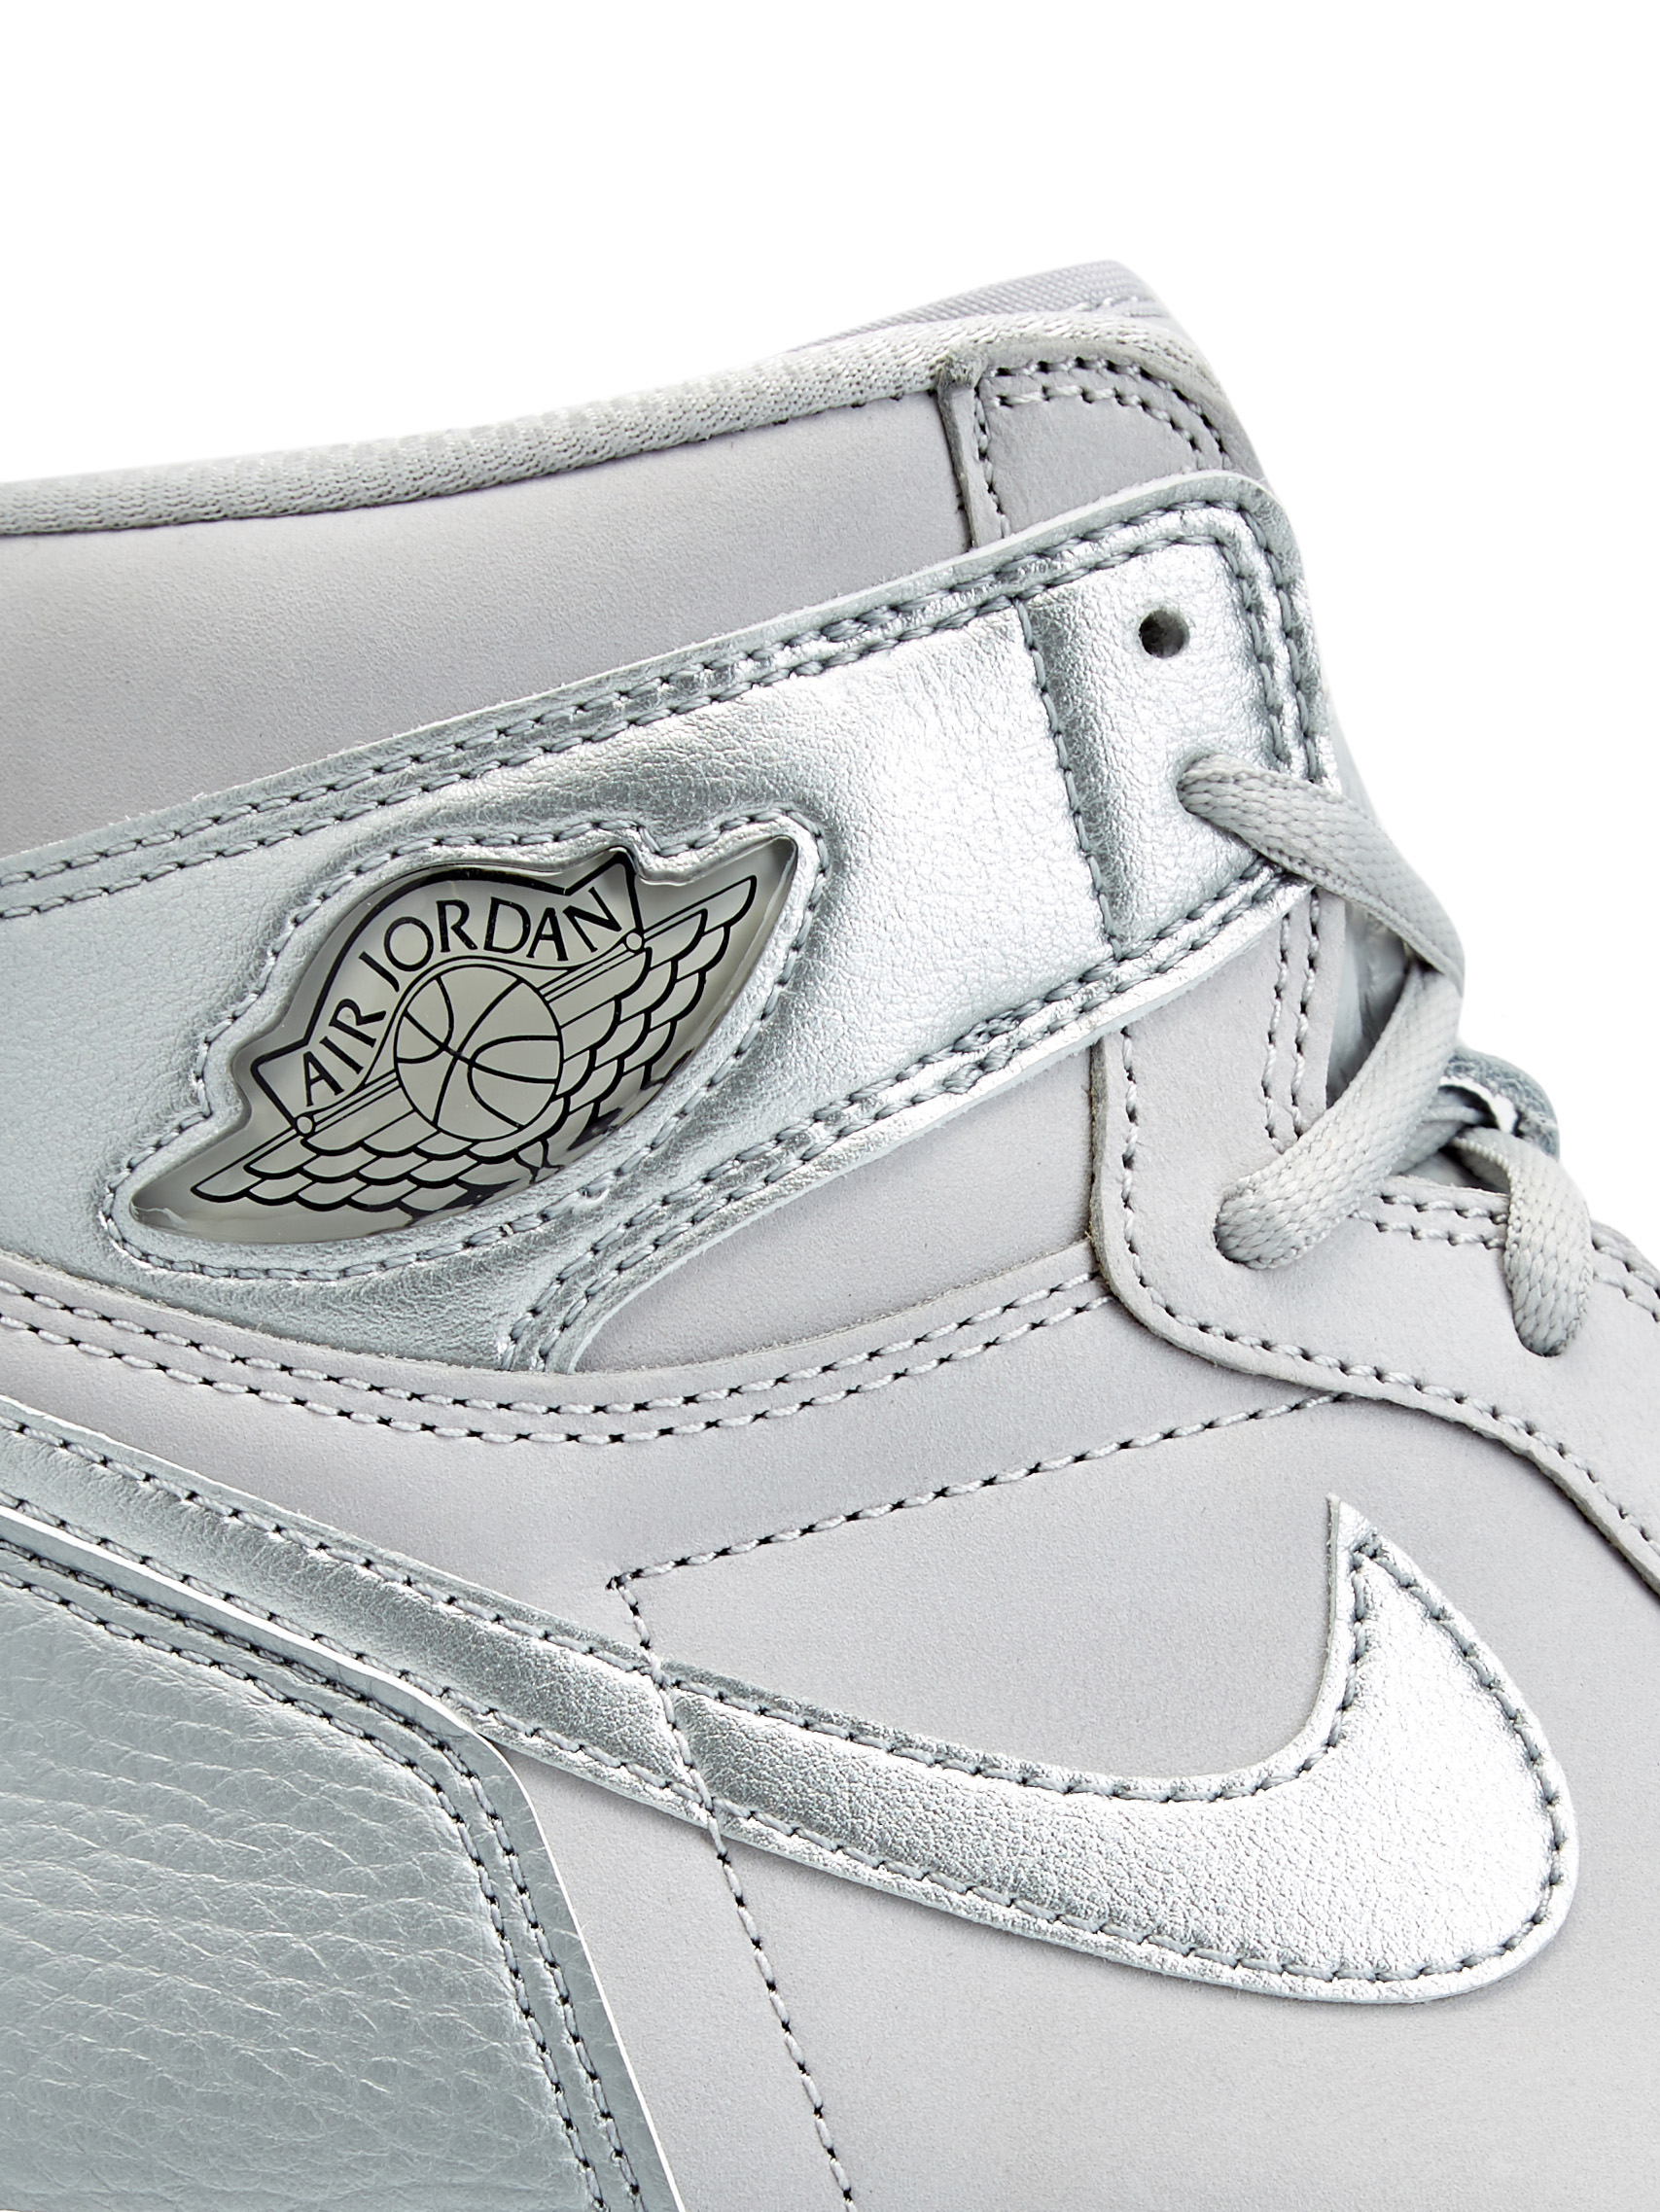 Кроссовки Jordan 1 High OG CO.JP 'Tokyo' Jordan, цвет серый, размер 42.5 - фото 5